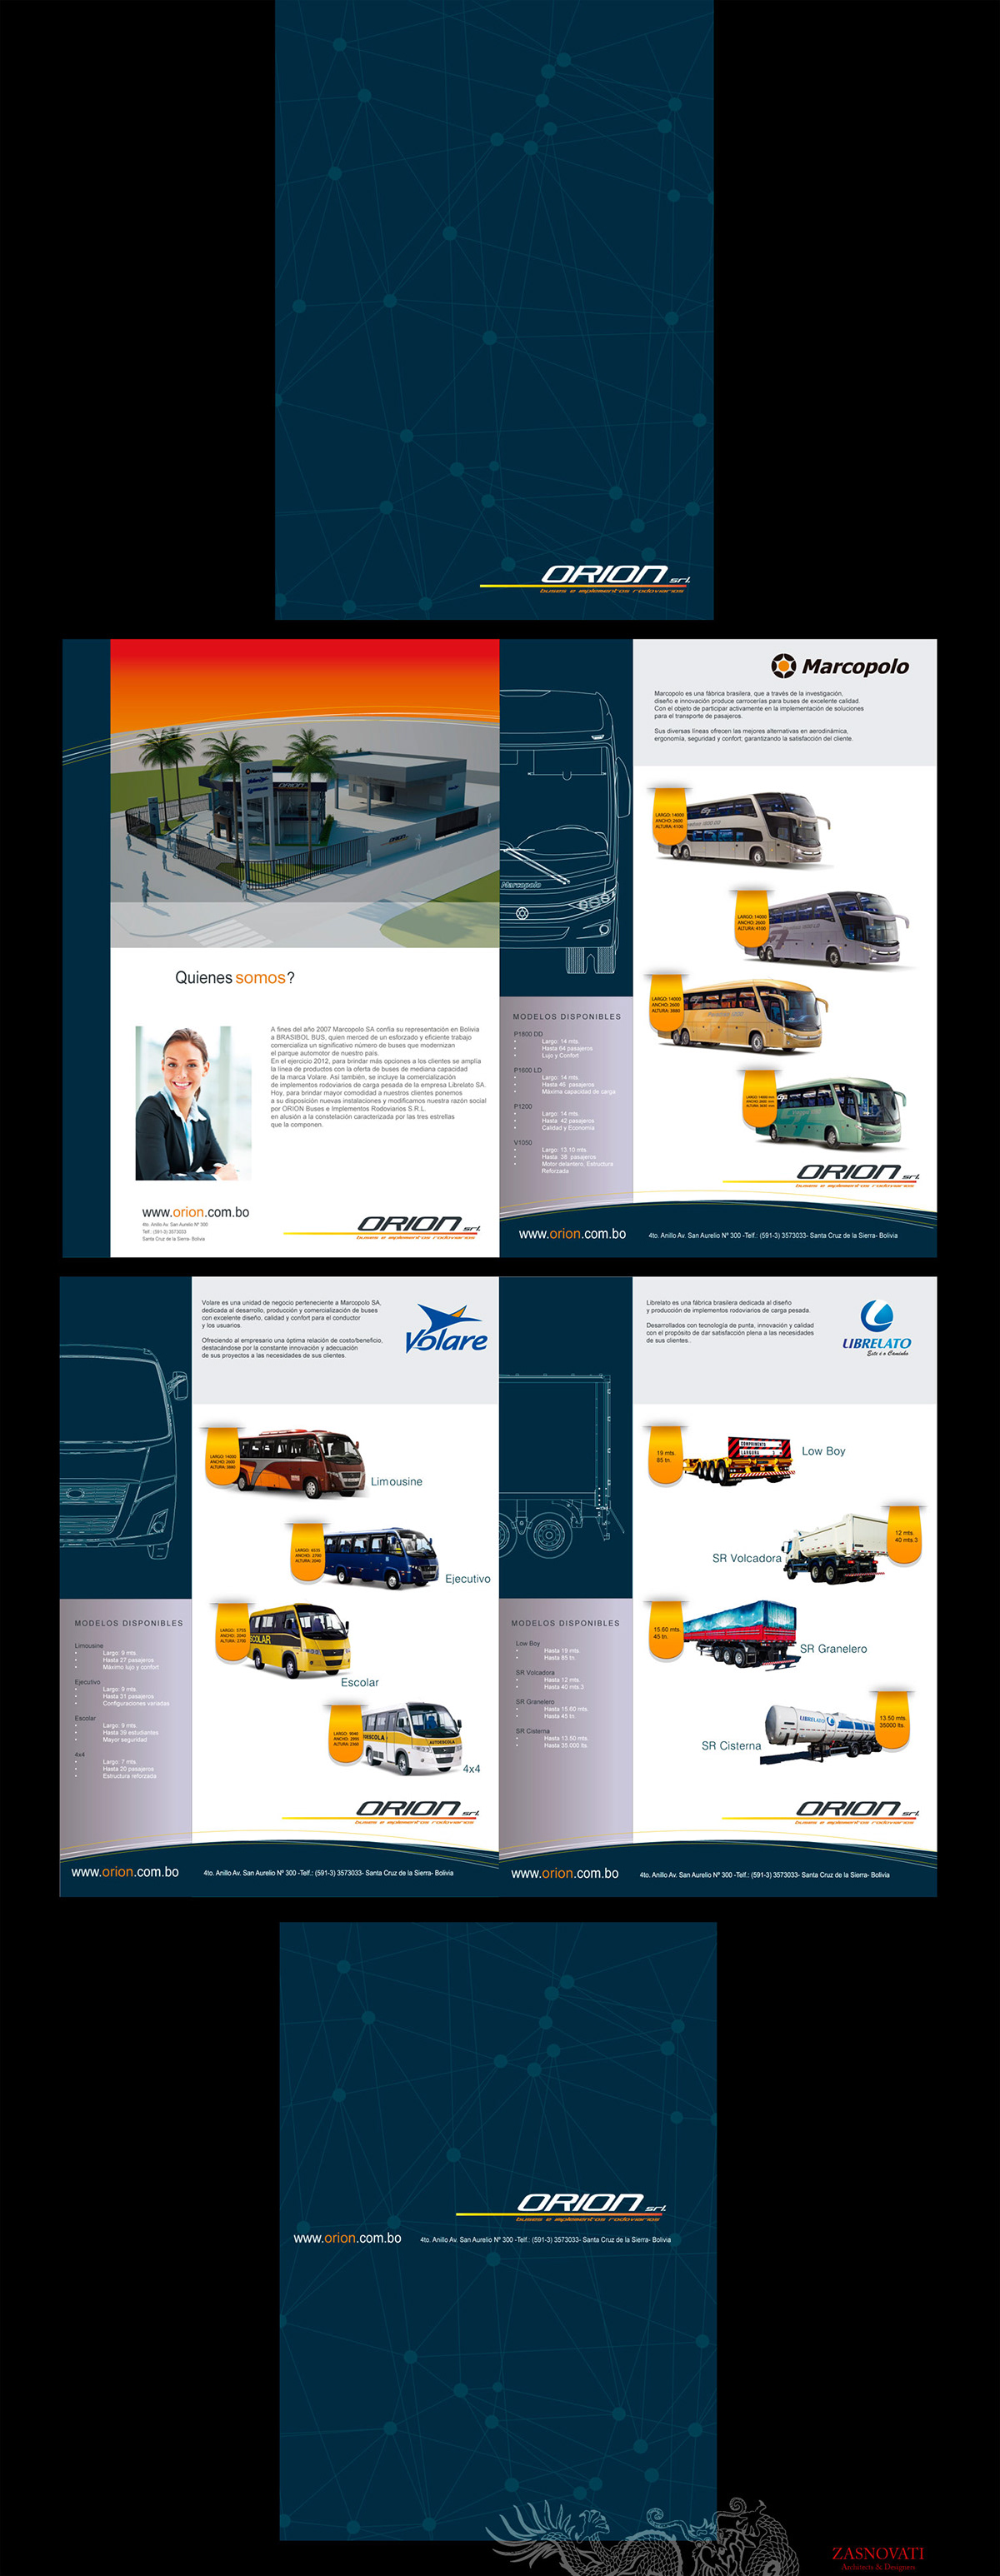 fleets brochure buses marcopolo heavy machinery visual identity Brand Design design visual image